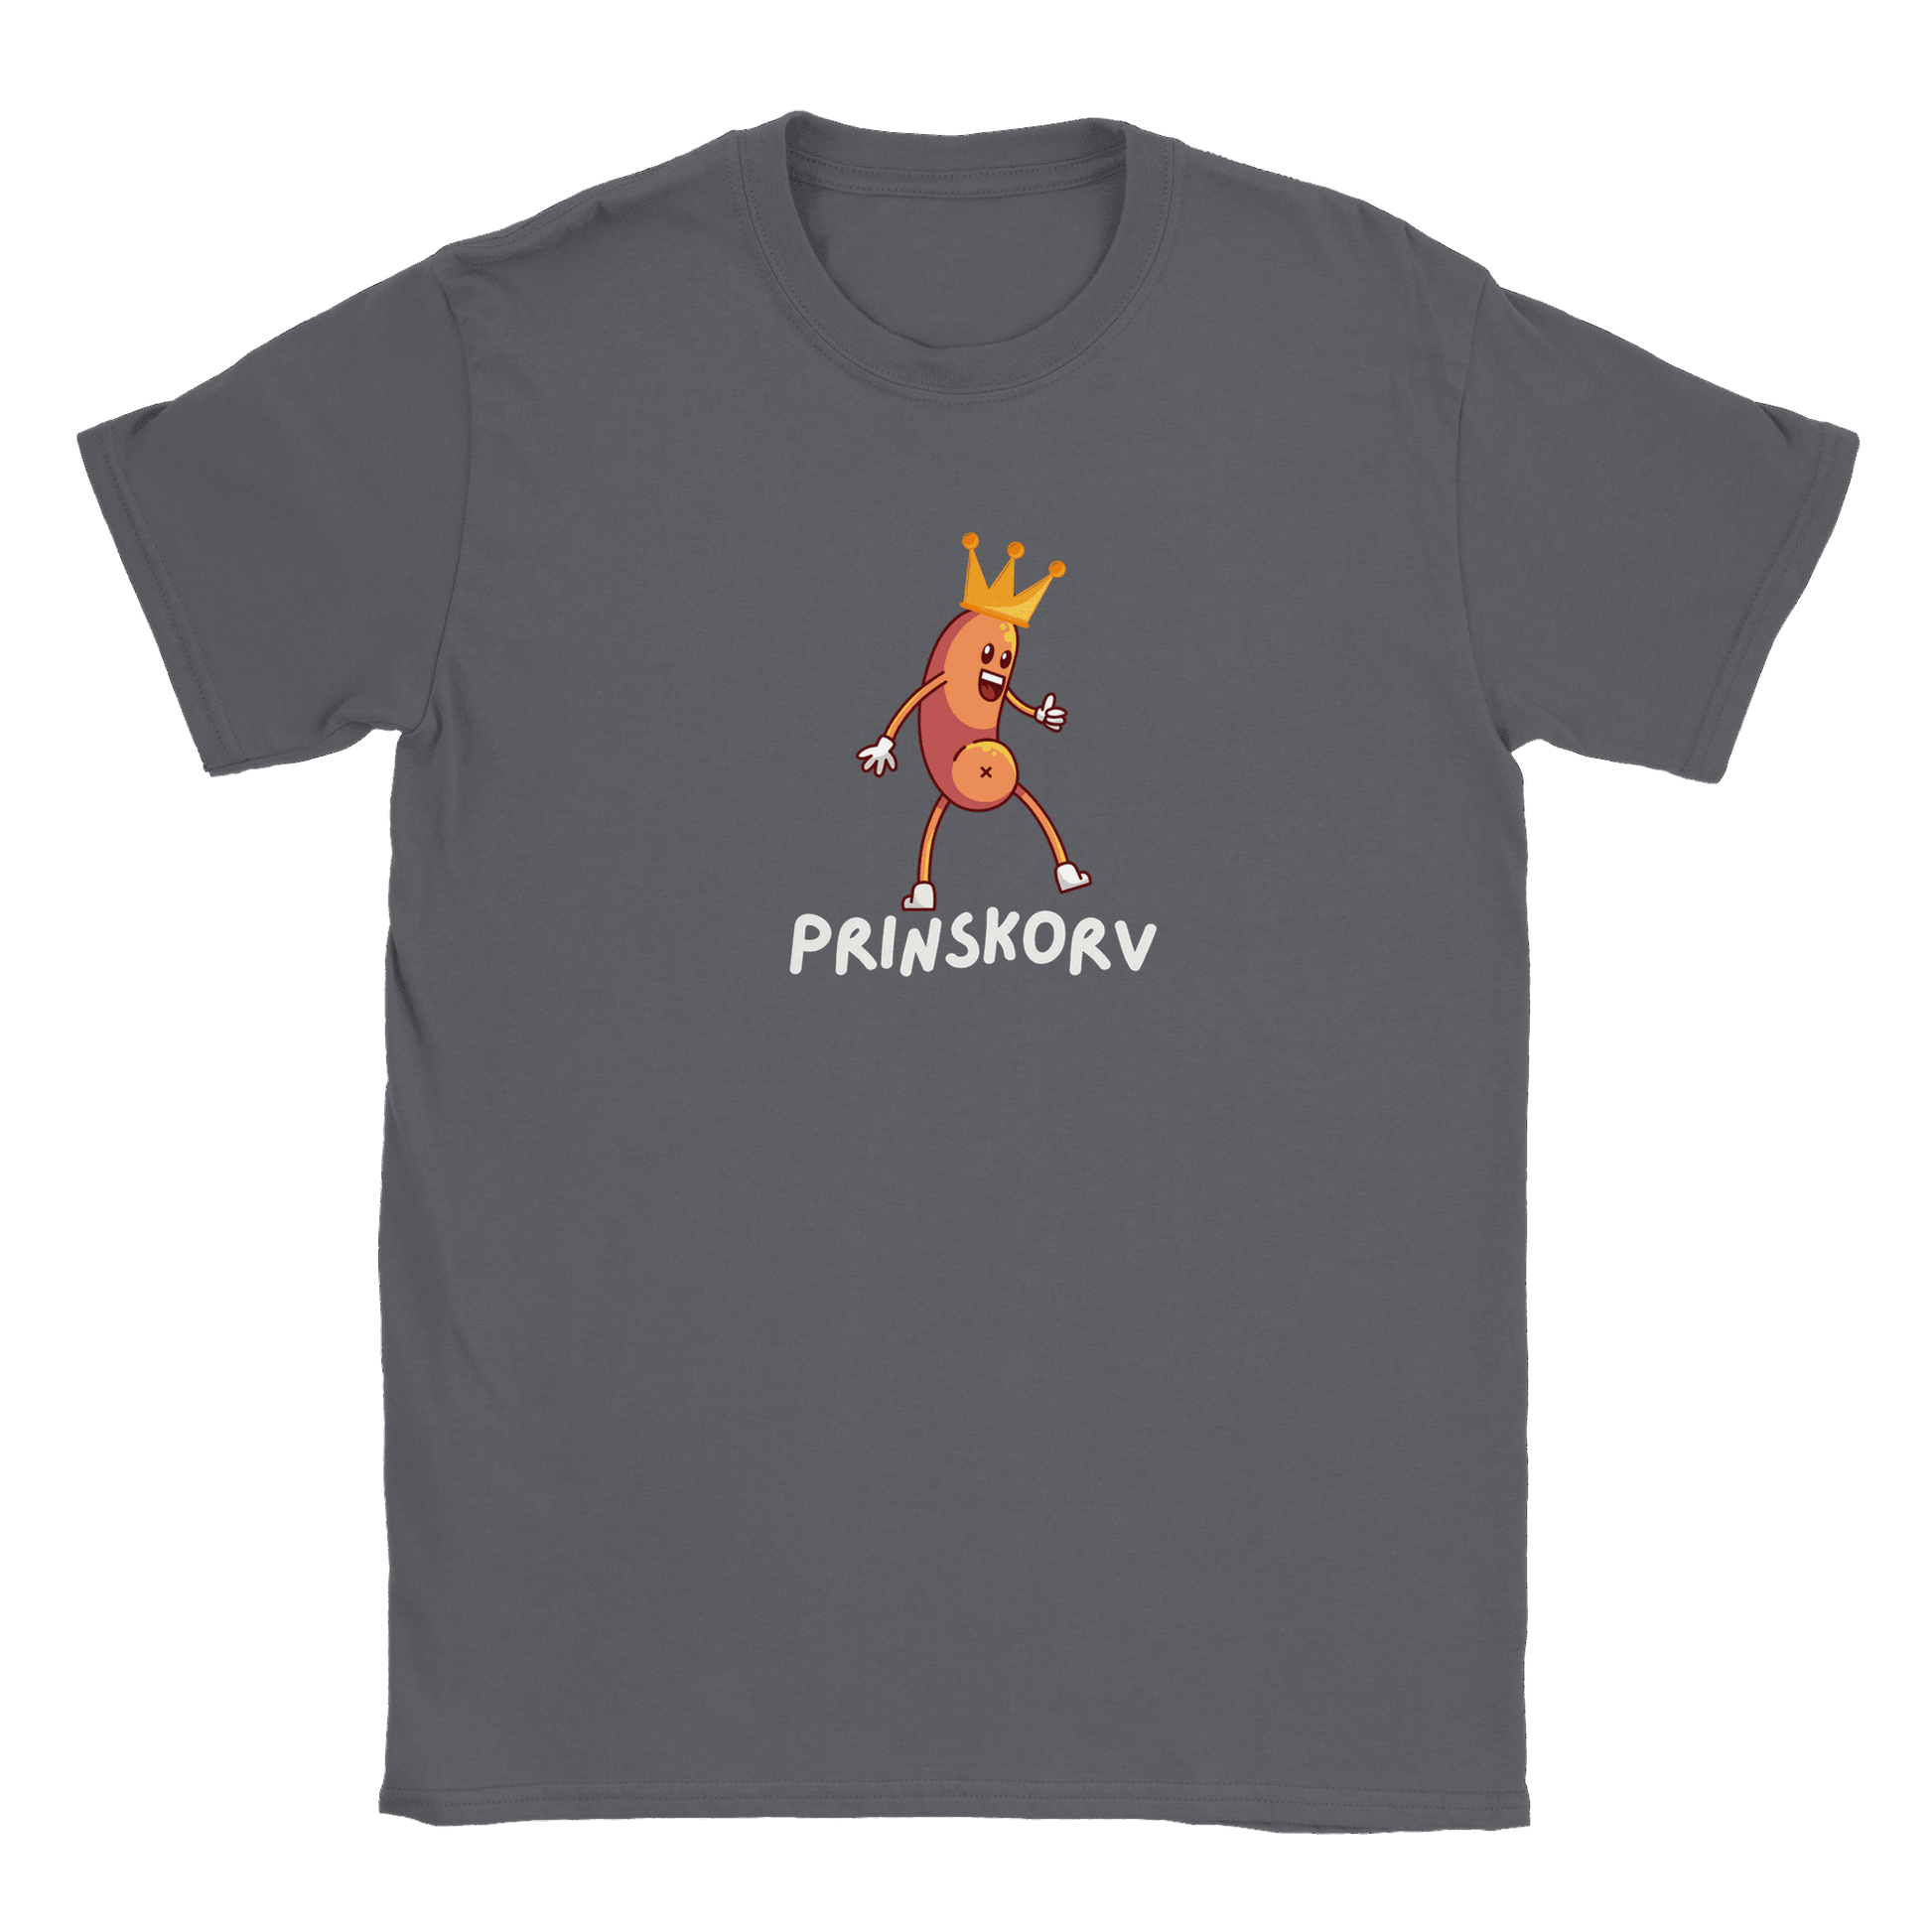 Prinskorv - T-shirt Charcoal